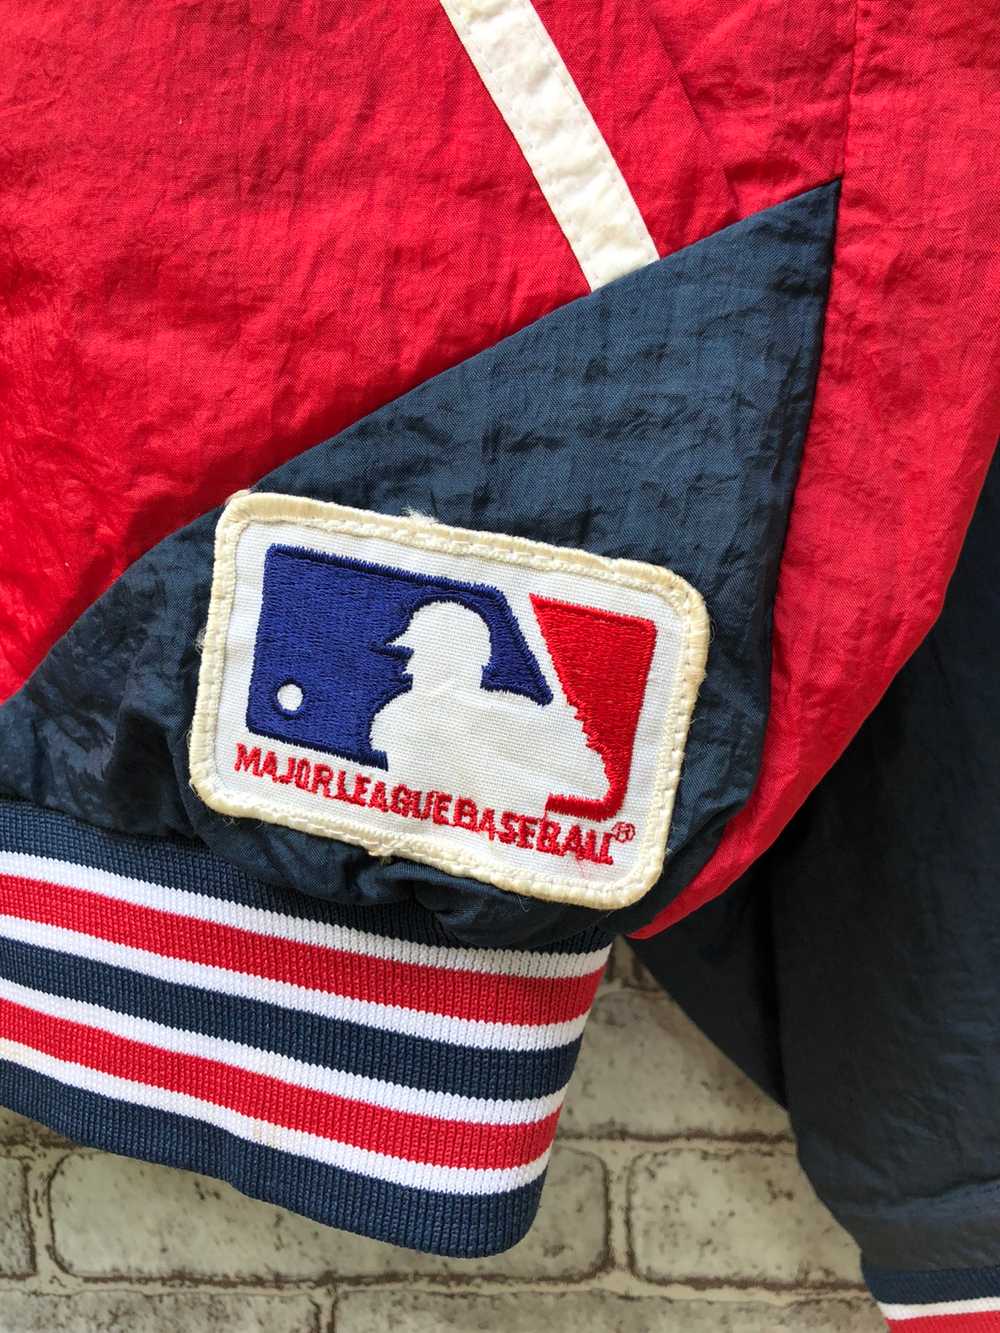 MLB - Japanese Brand Vintage MLB Sweater - image 5